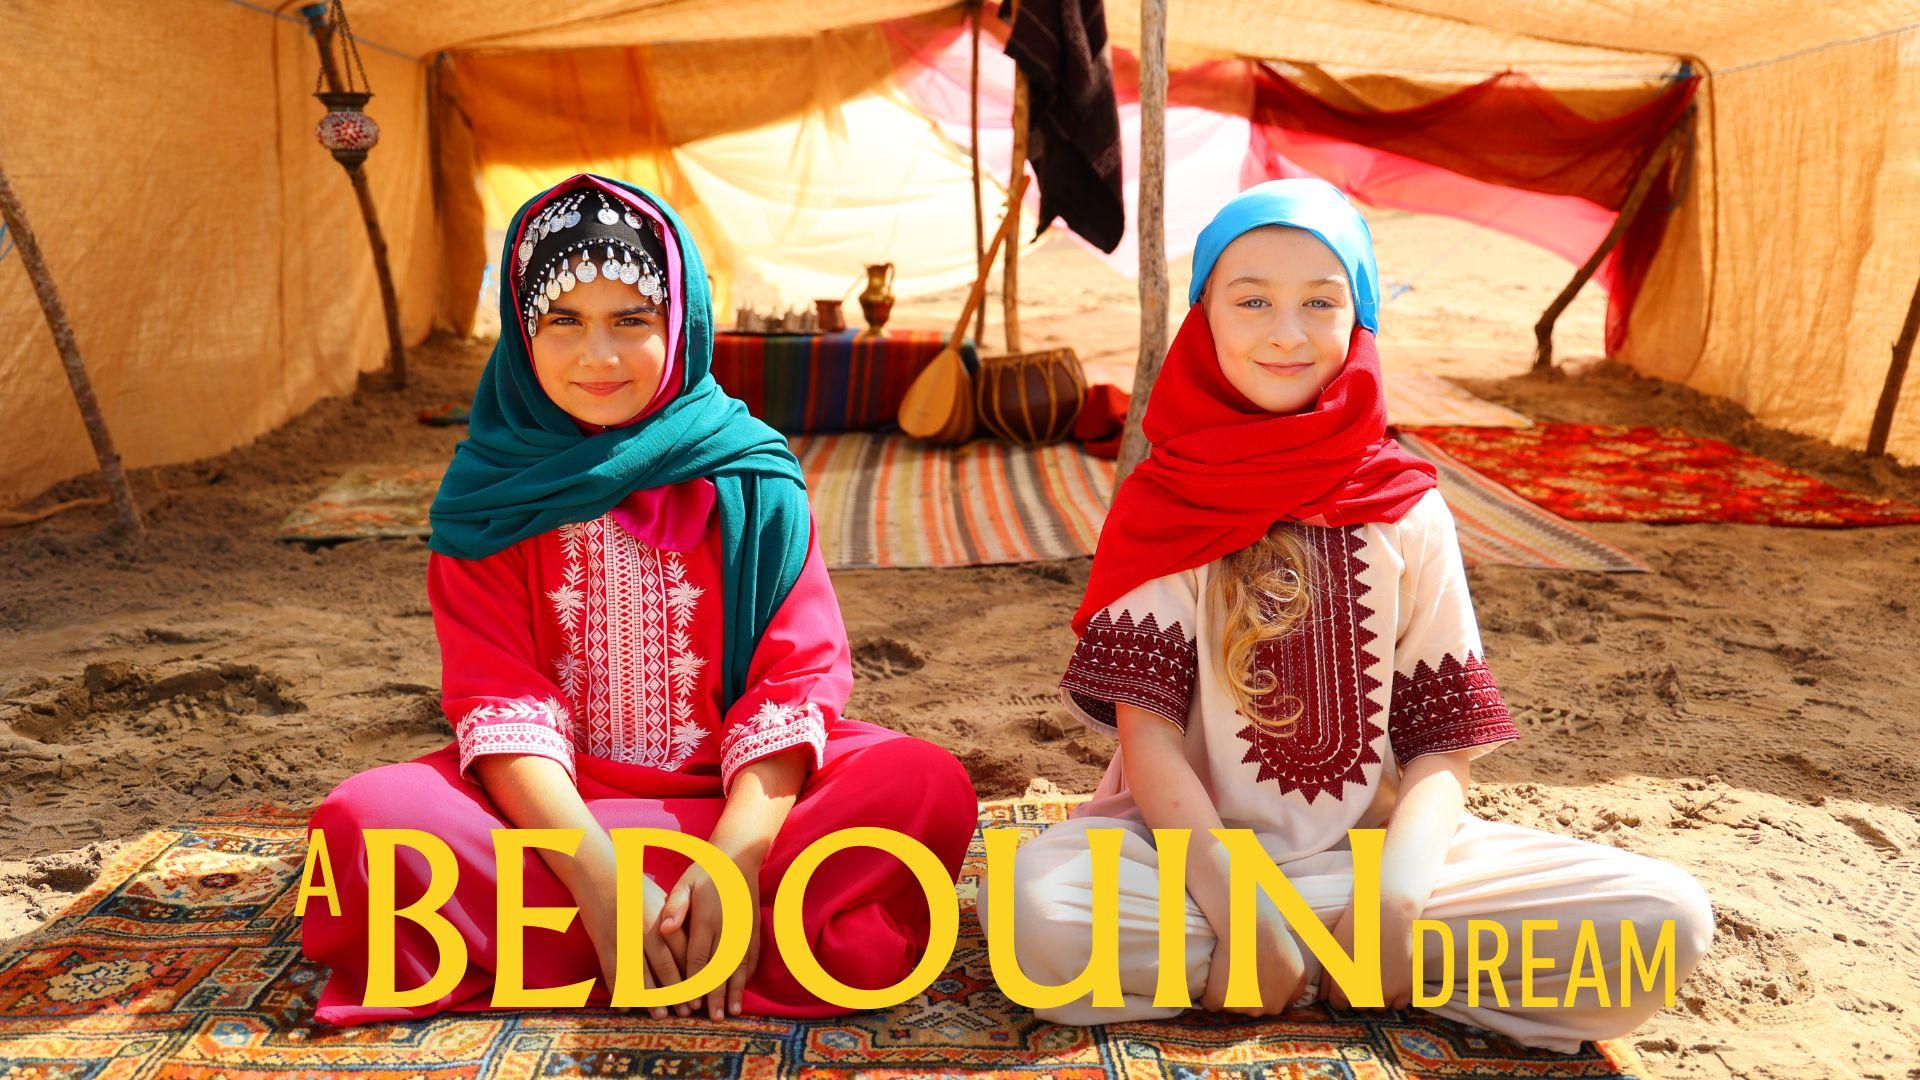 Breuddwyd Bedouin